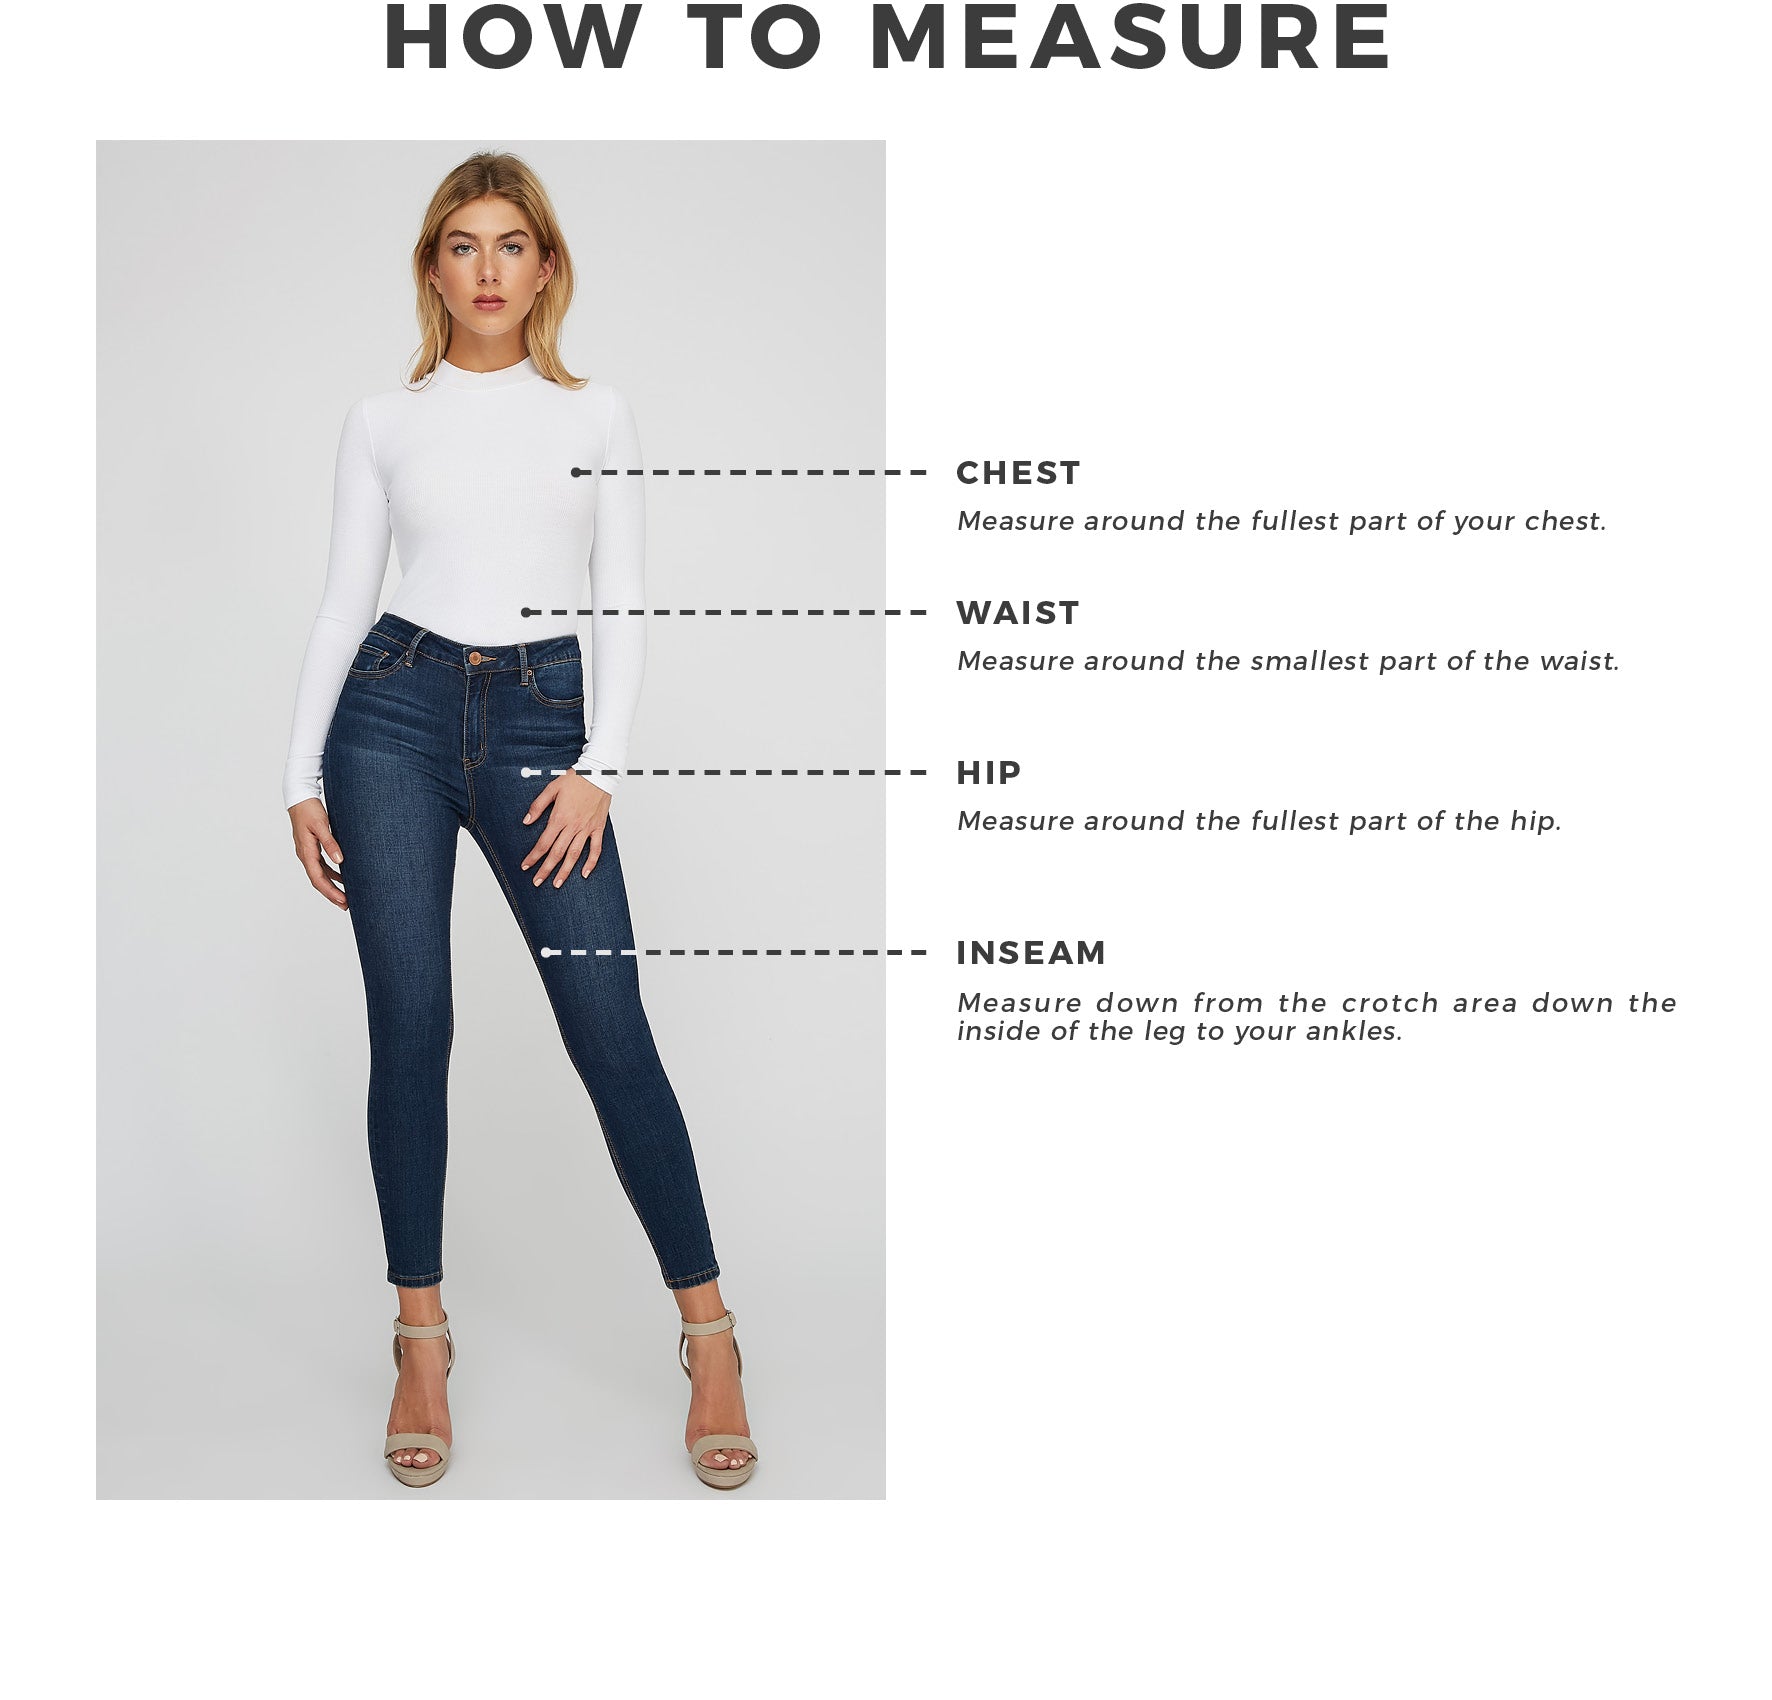 Waist Size Chart For Women S Jeans